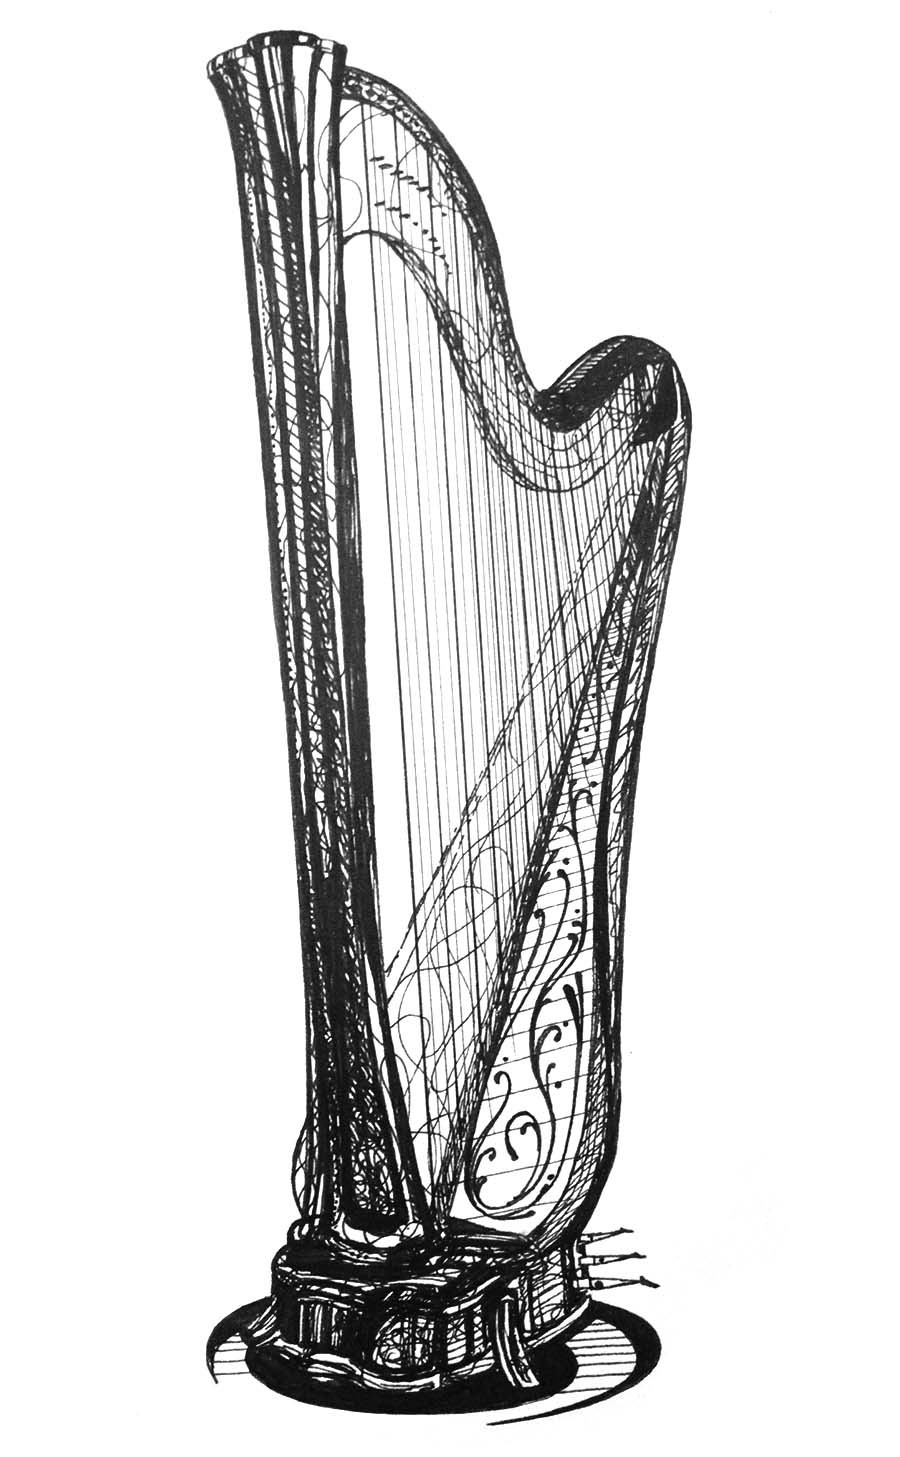 kh daily drawing - daily drawing week 14 strings 5: harp